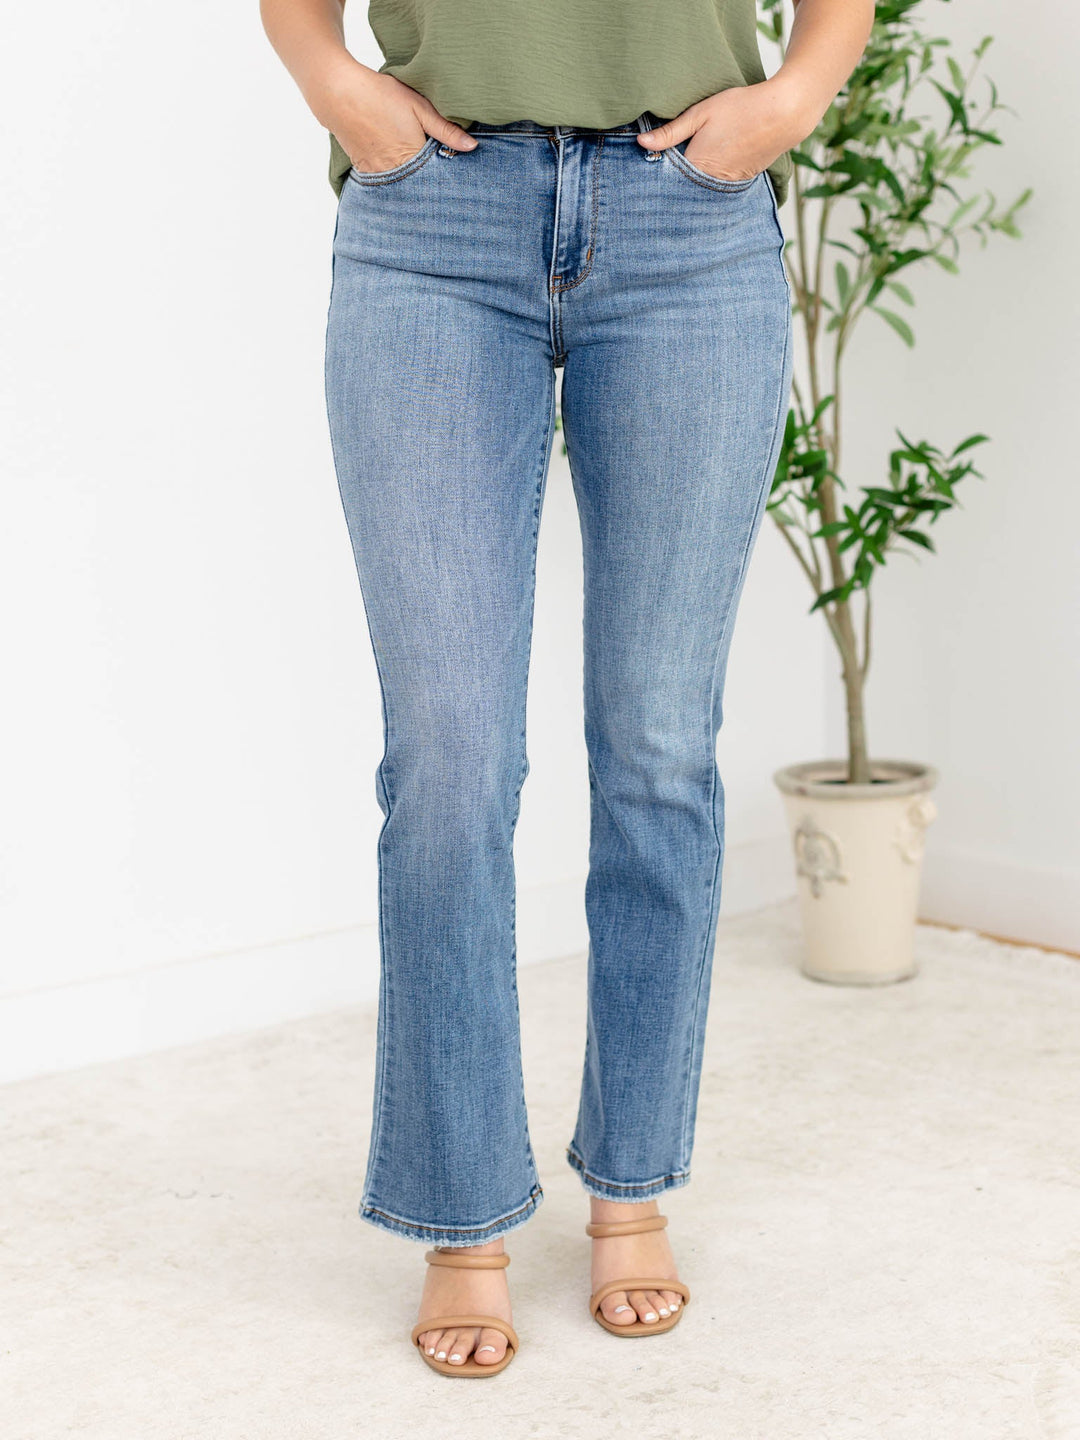 Judy Blue Medium Mid Rise Vintage BootcutDenim jeans